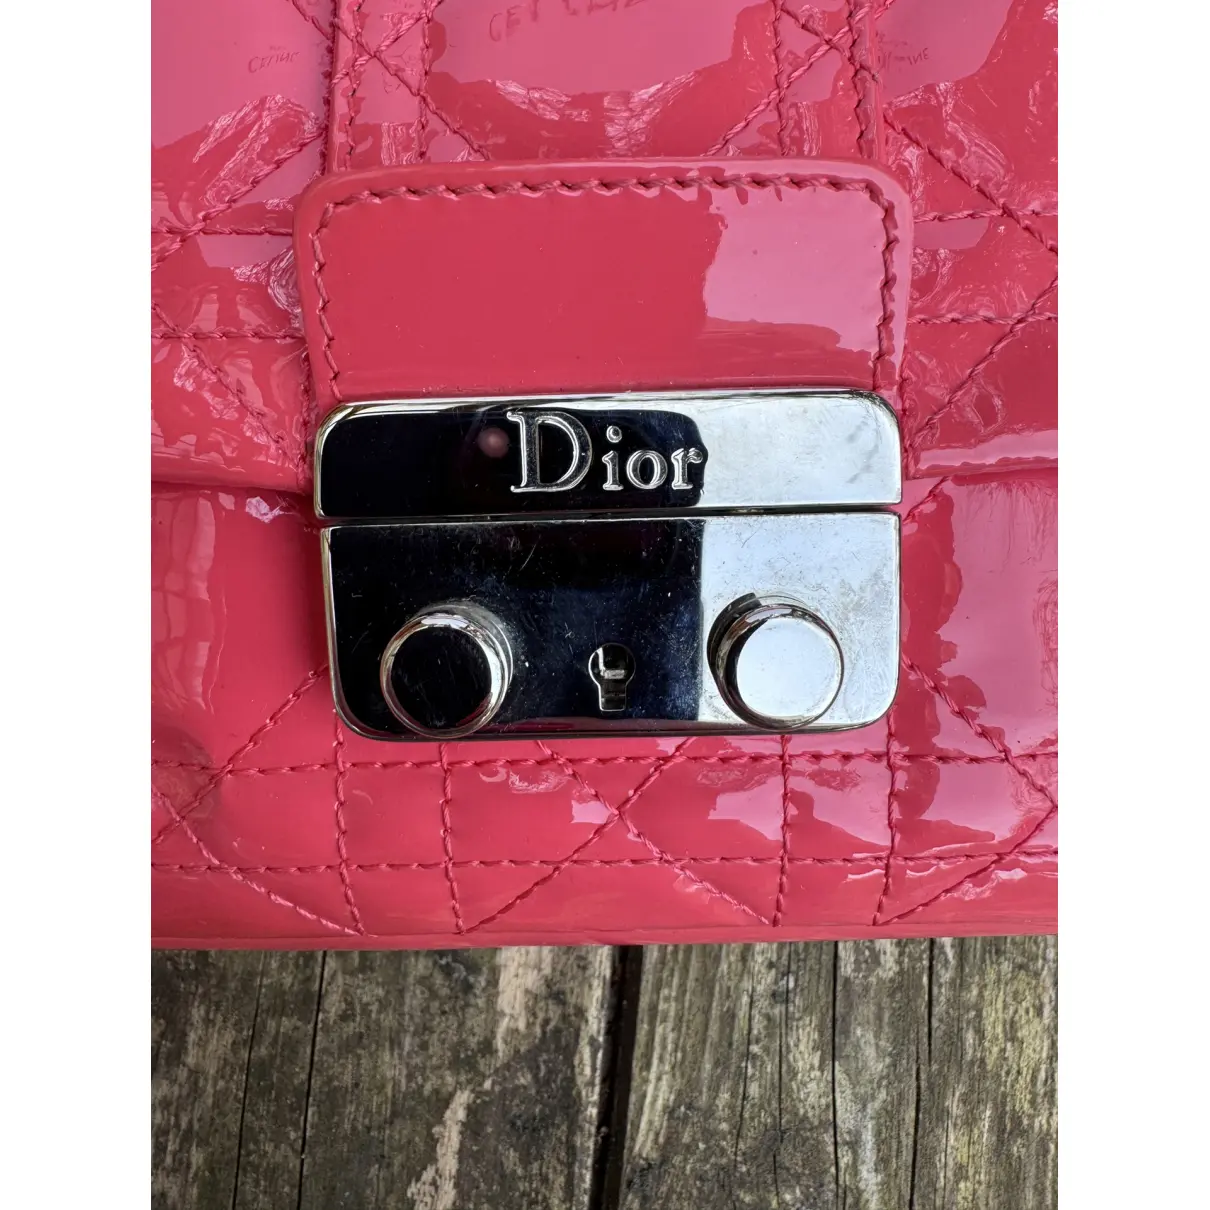 Buy Dior Miss Dior patent leather mini bag online